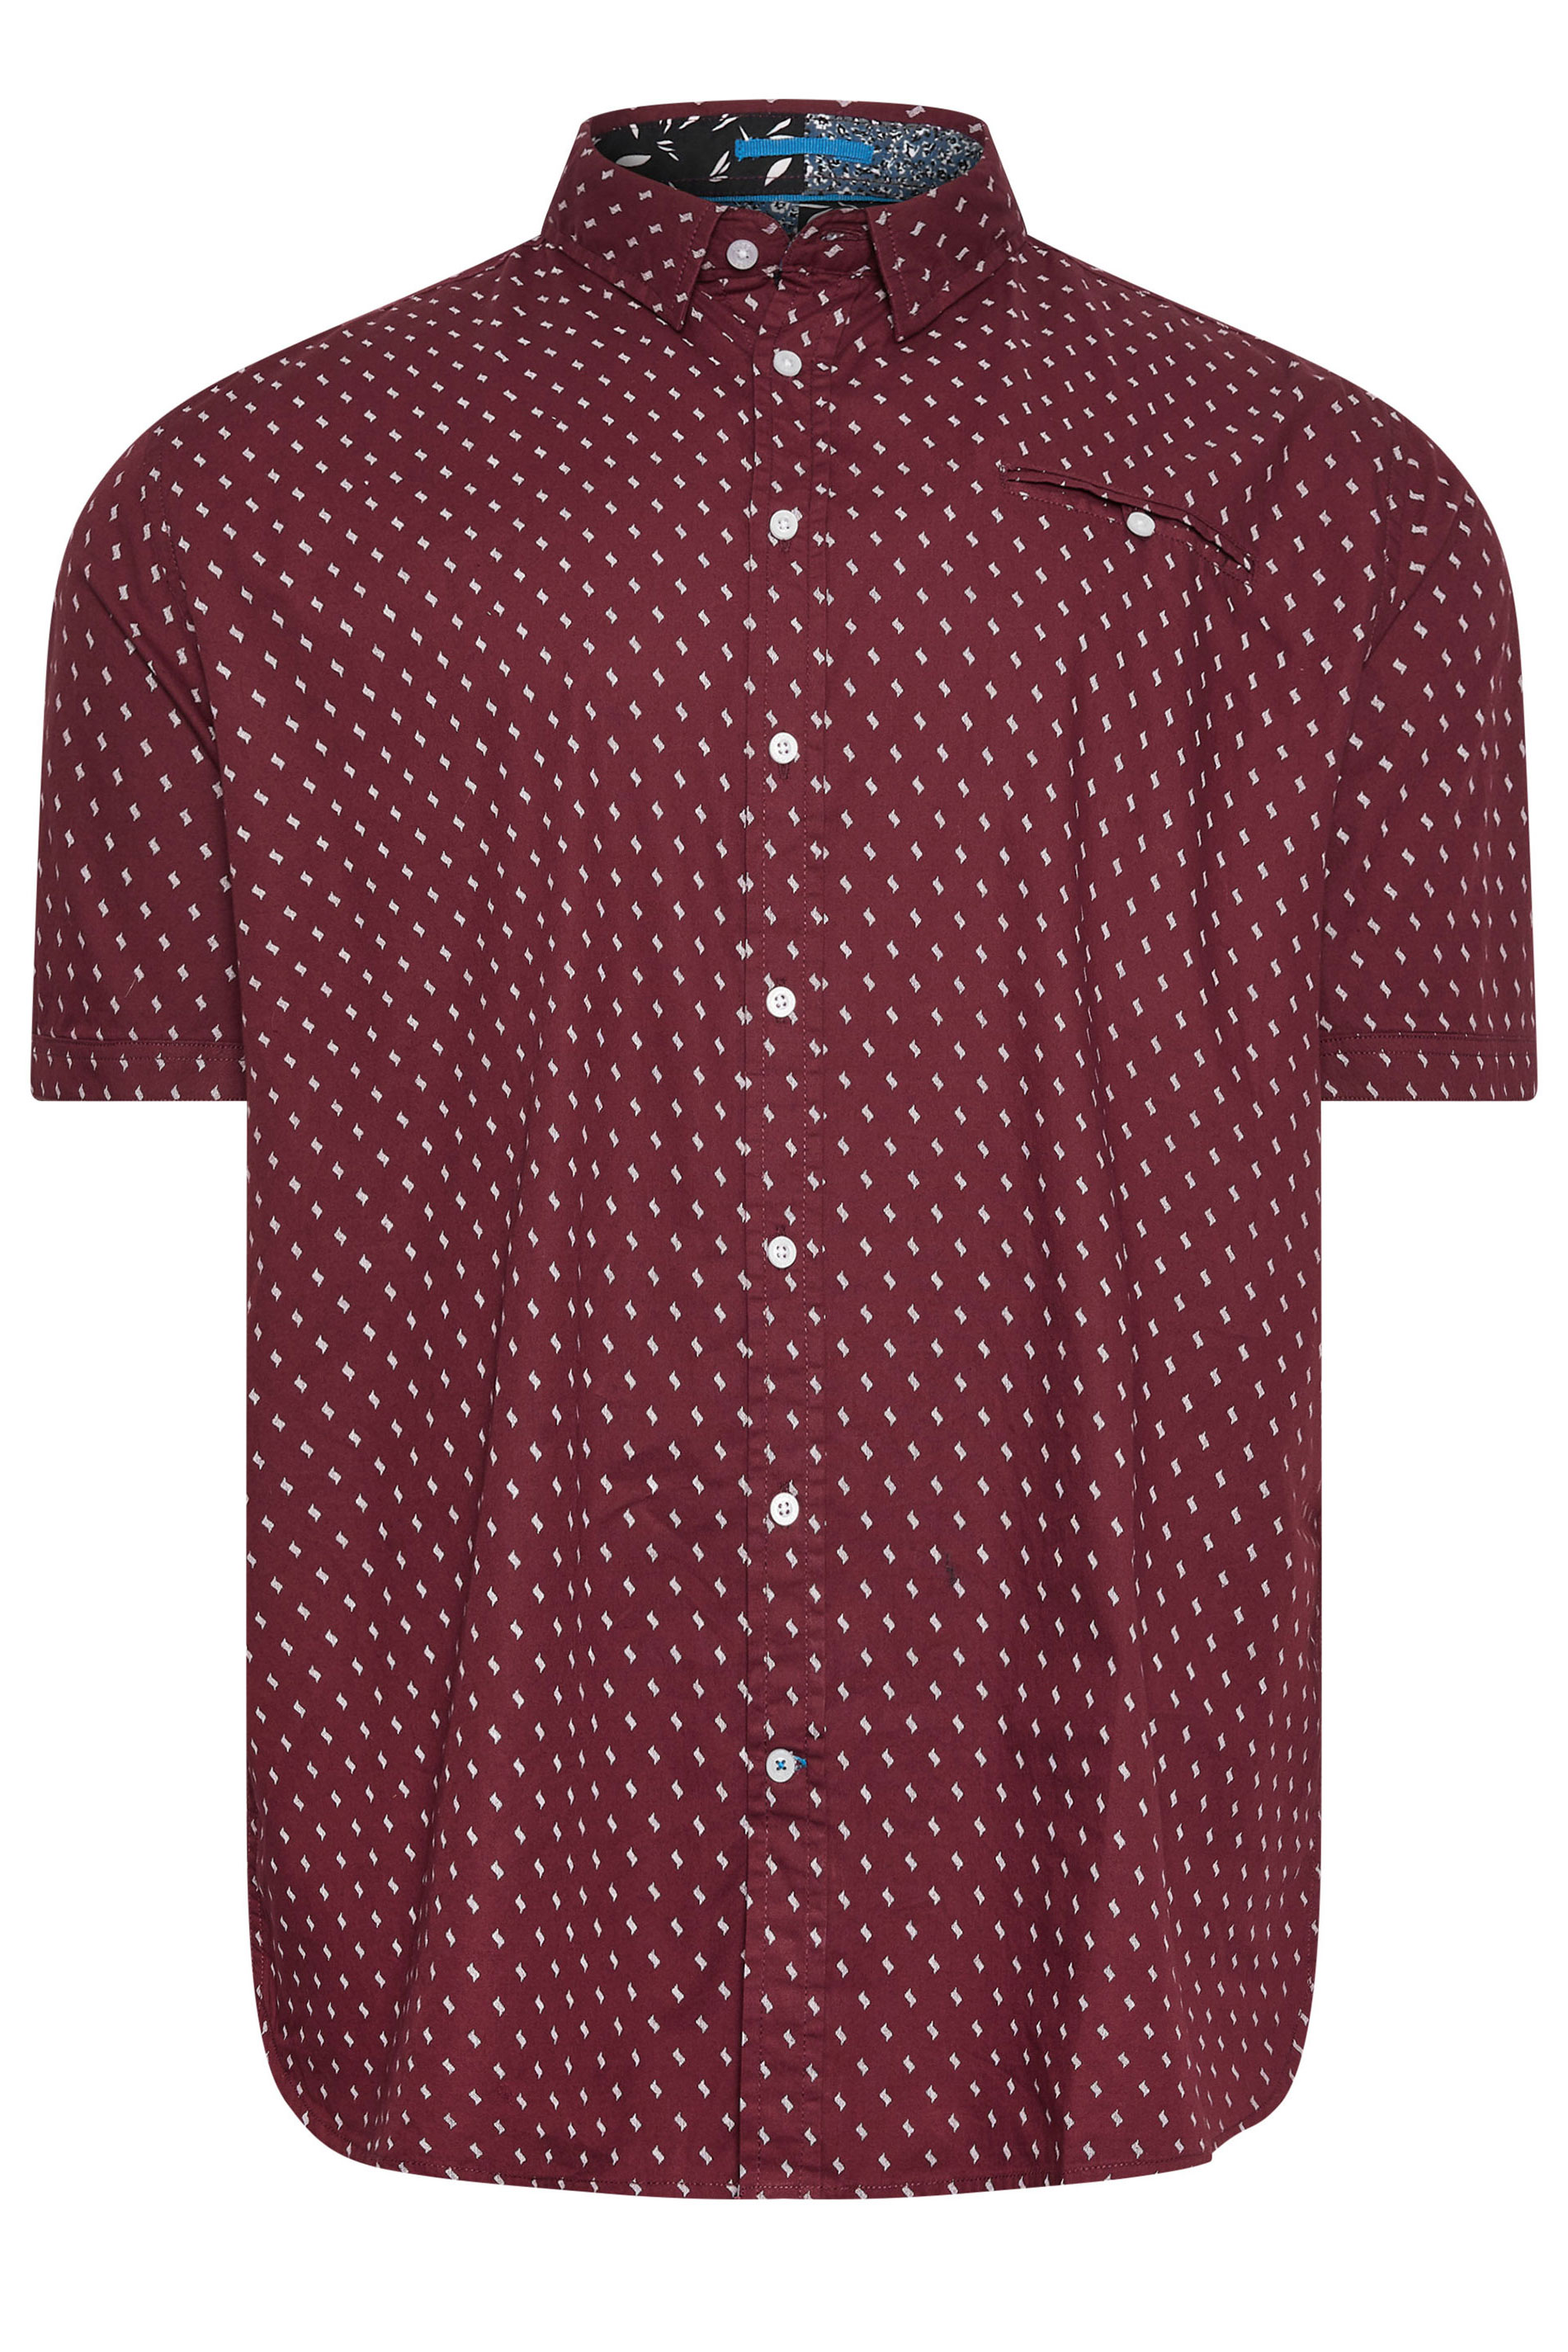 D555 Big & Tall Burgundy All Over Print Short Sleeve Shirt | BadRhino 3